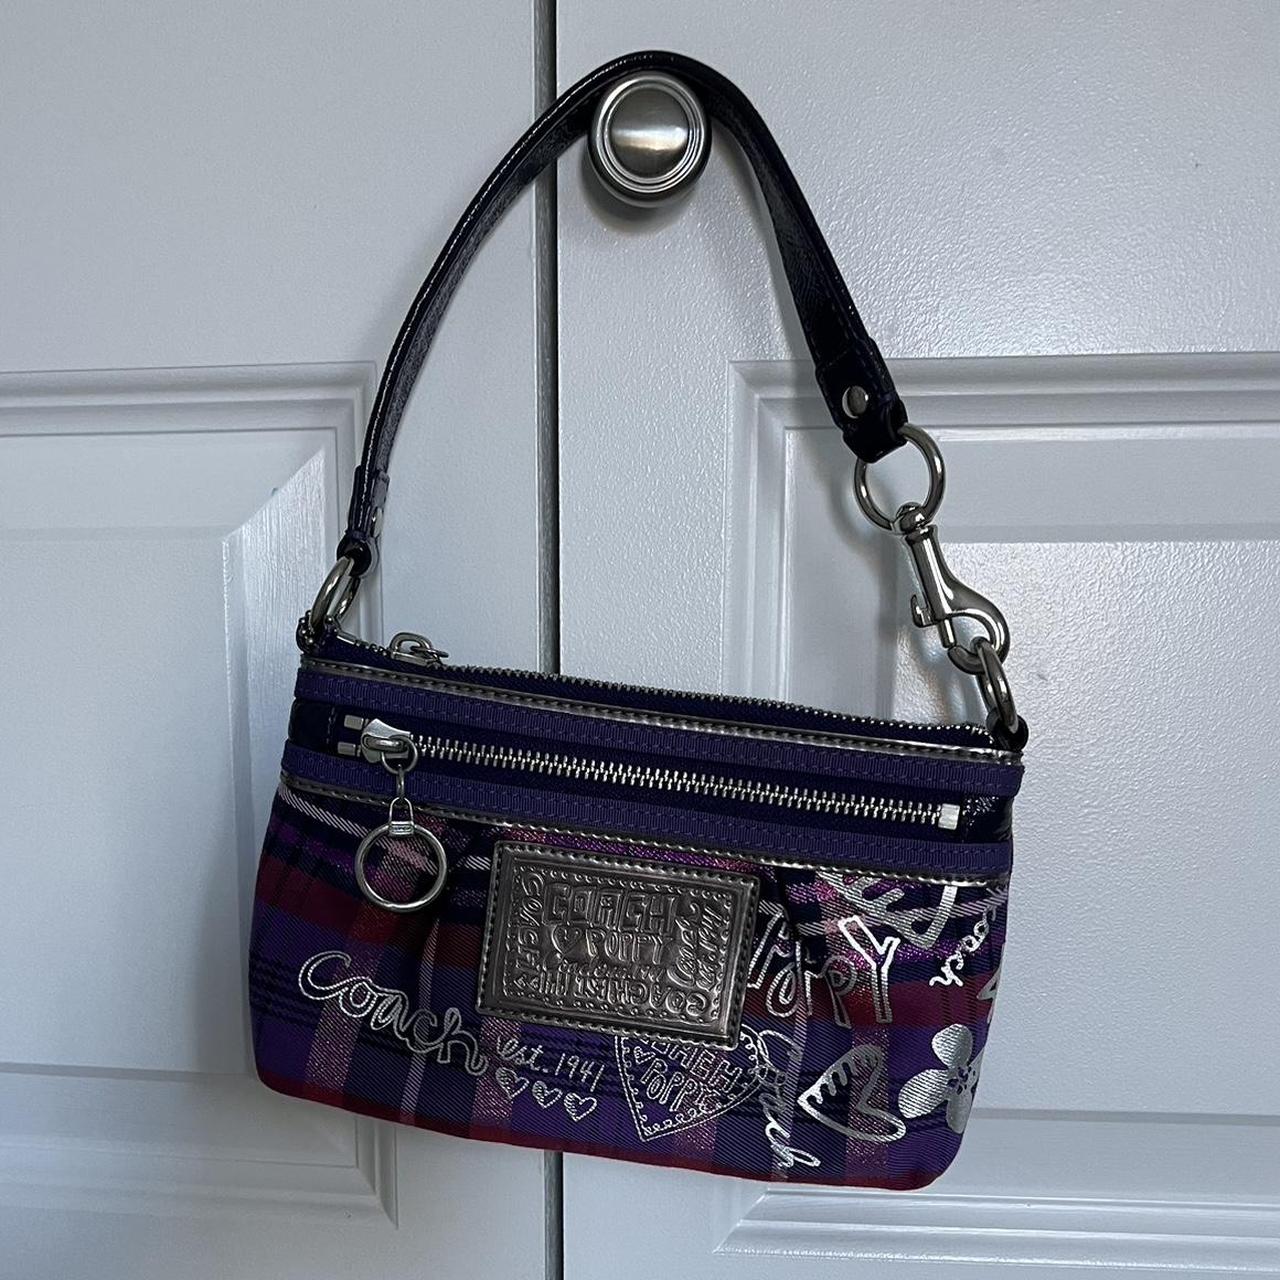 bag of the day - Coach Mini Rowan satchel | Gallery posted by  handbags2diefor | Lemon8